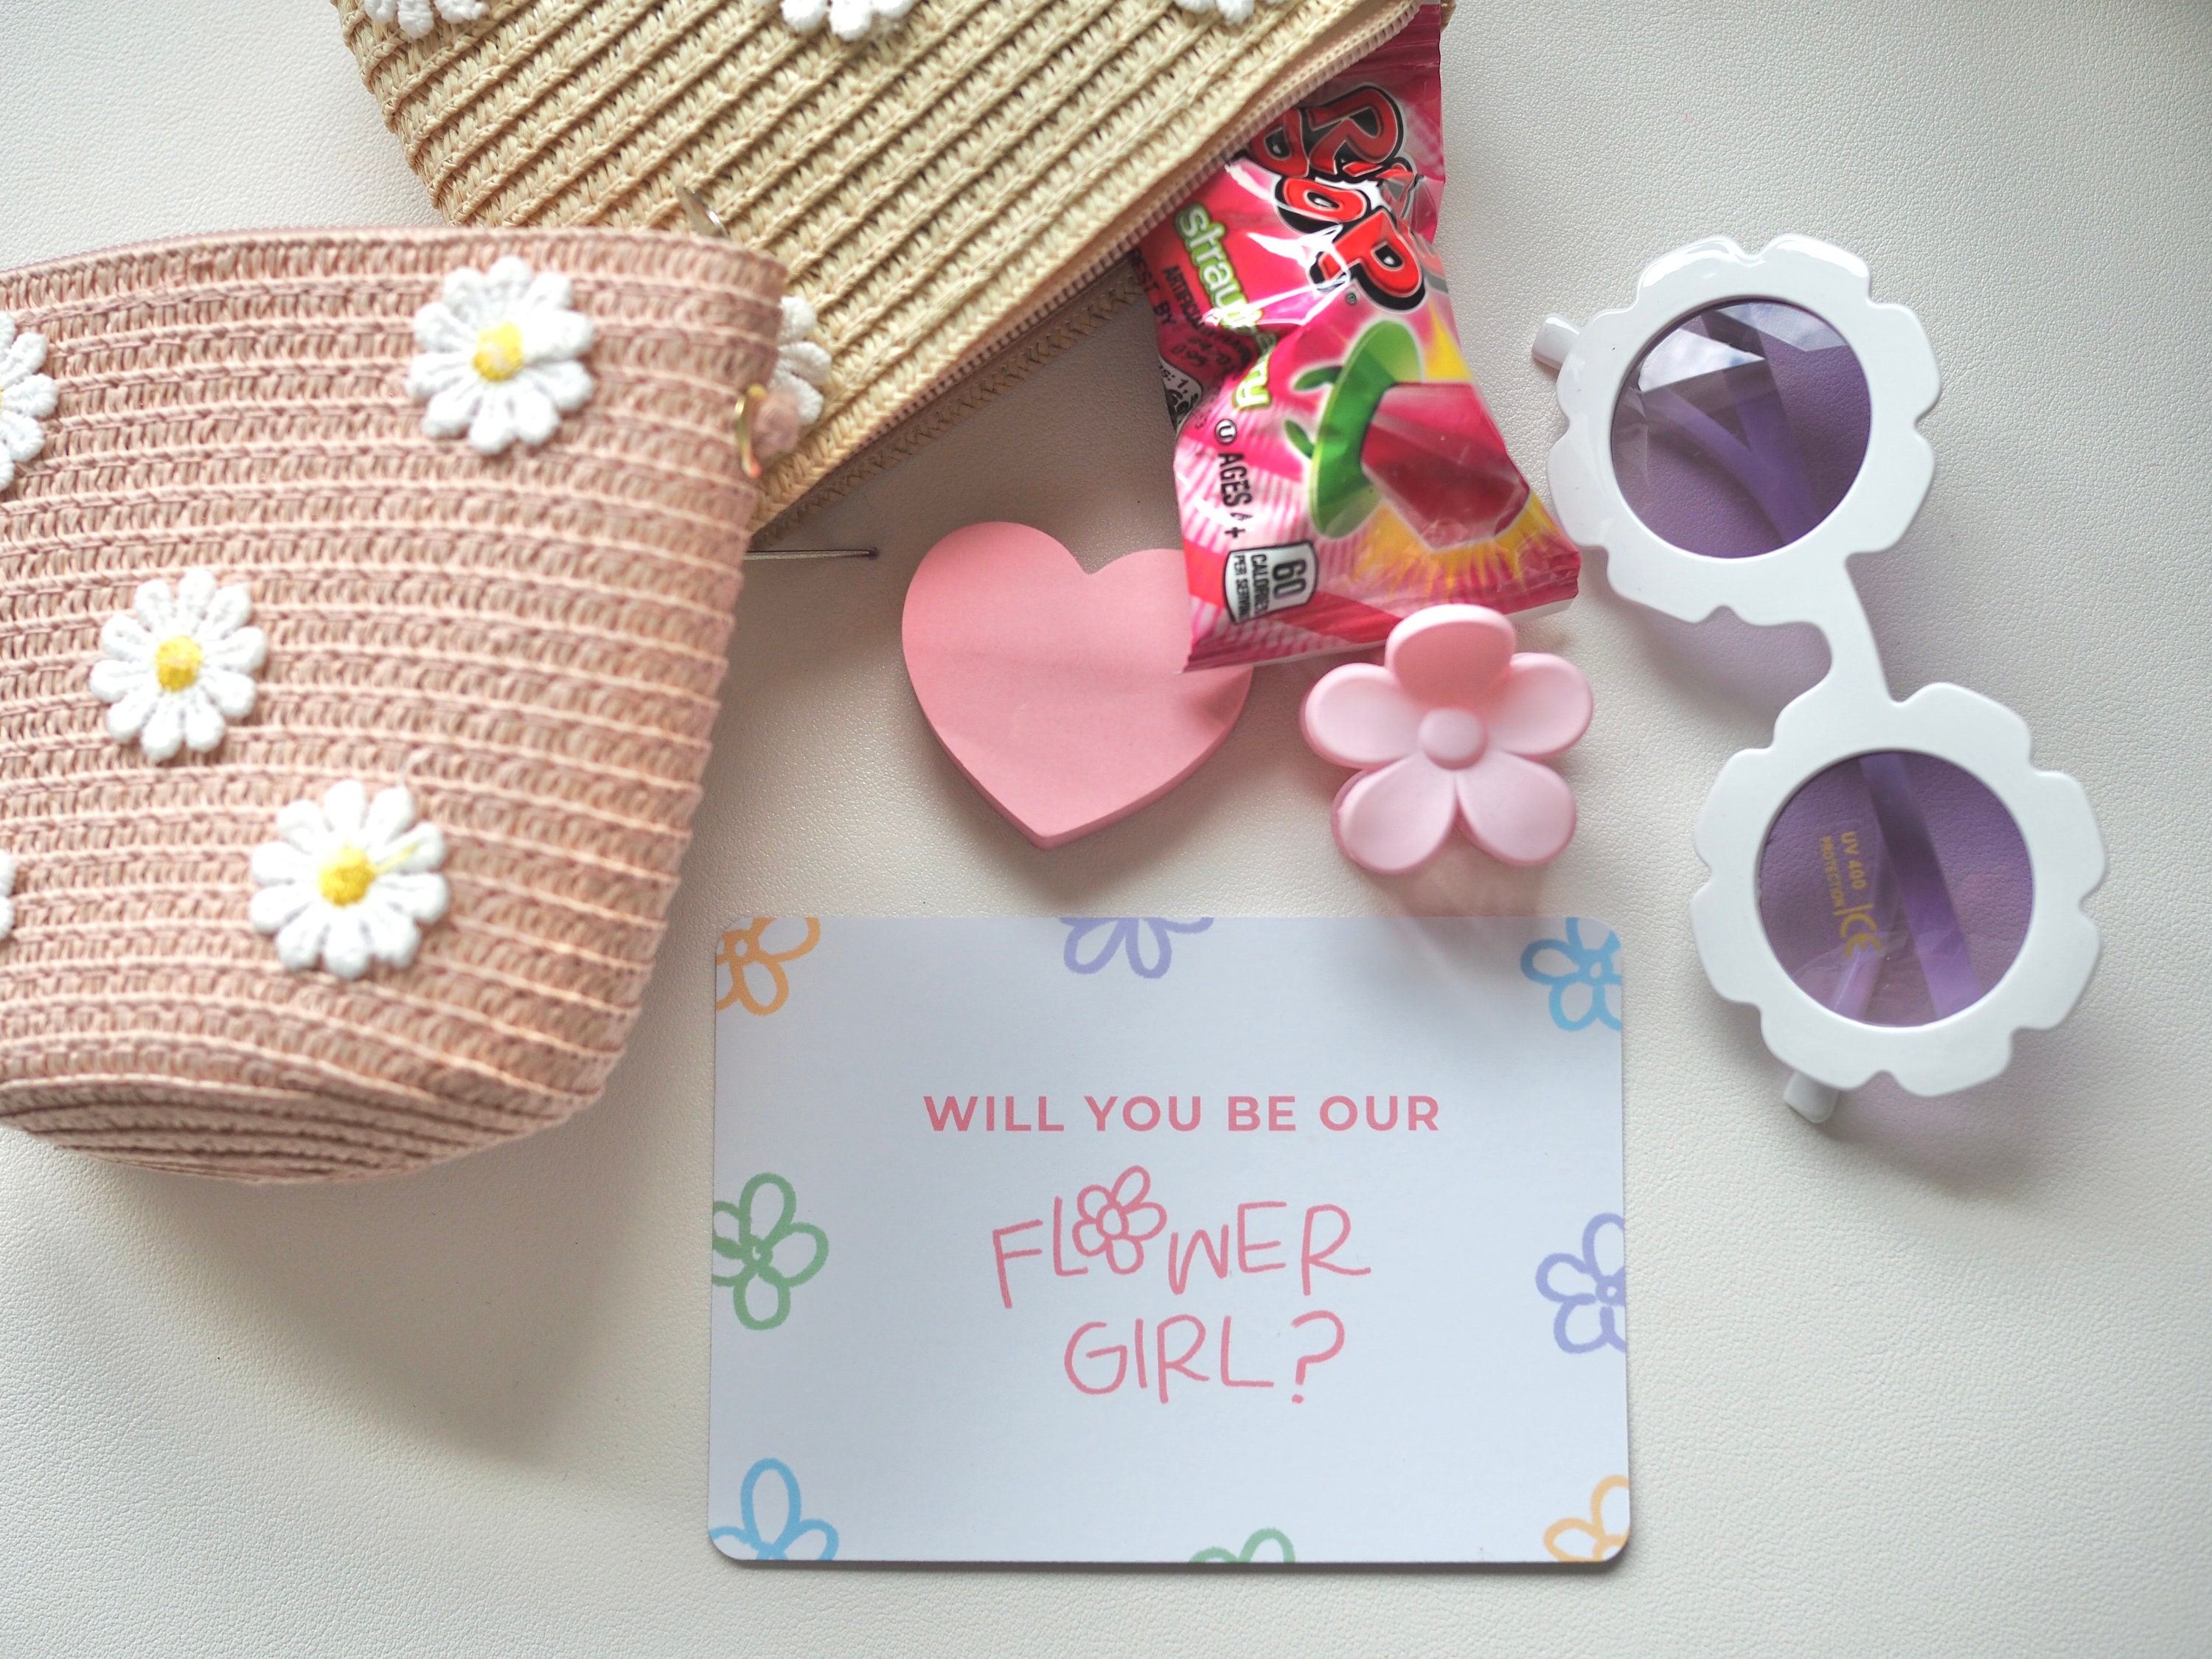 Flower Craft Kit for Kids, Yarn Sewing Kit for Beginners, Diy Crafts for  Gifts, Kids Valentines Gift Basket, Easter Basket Stuffer for Girls 